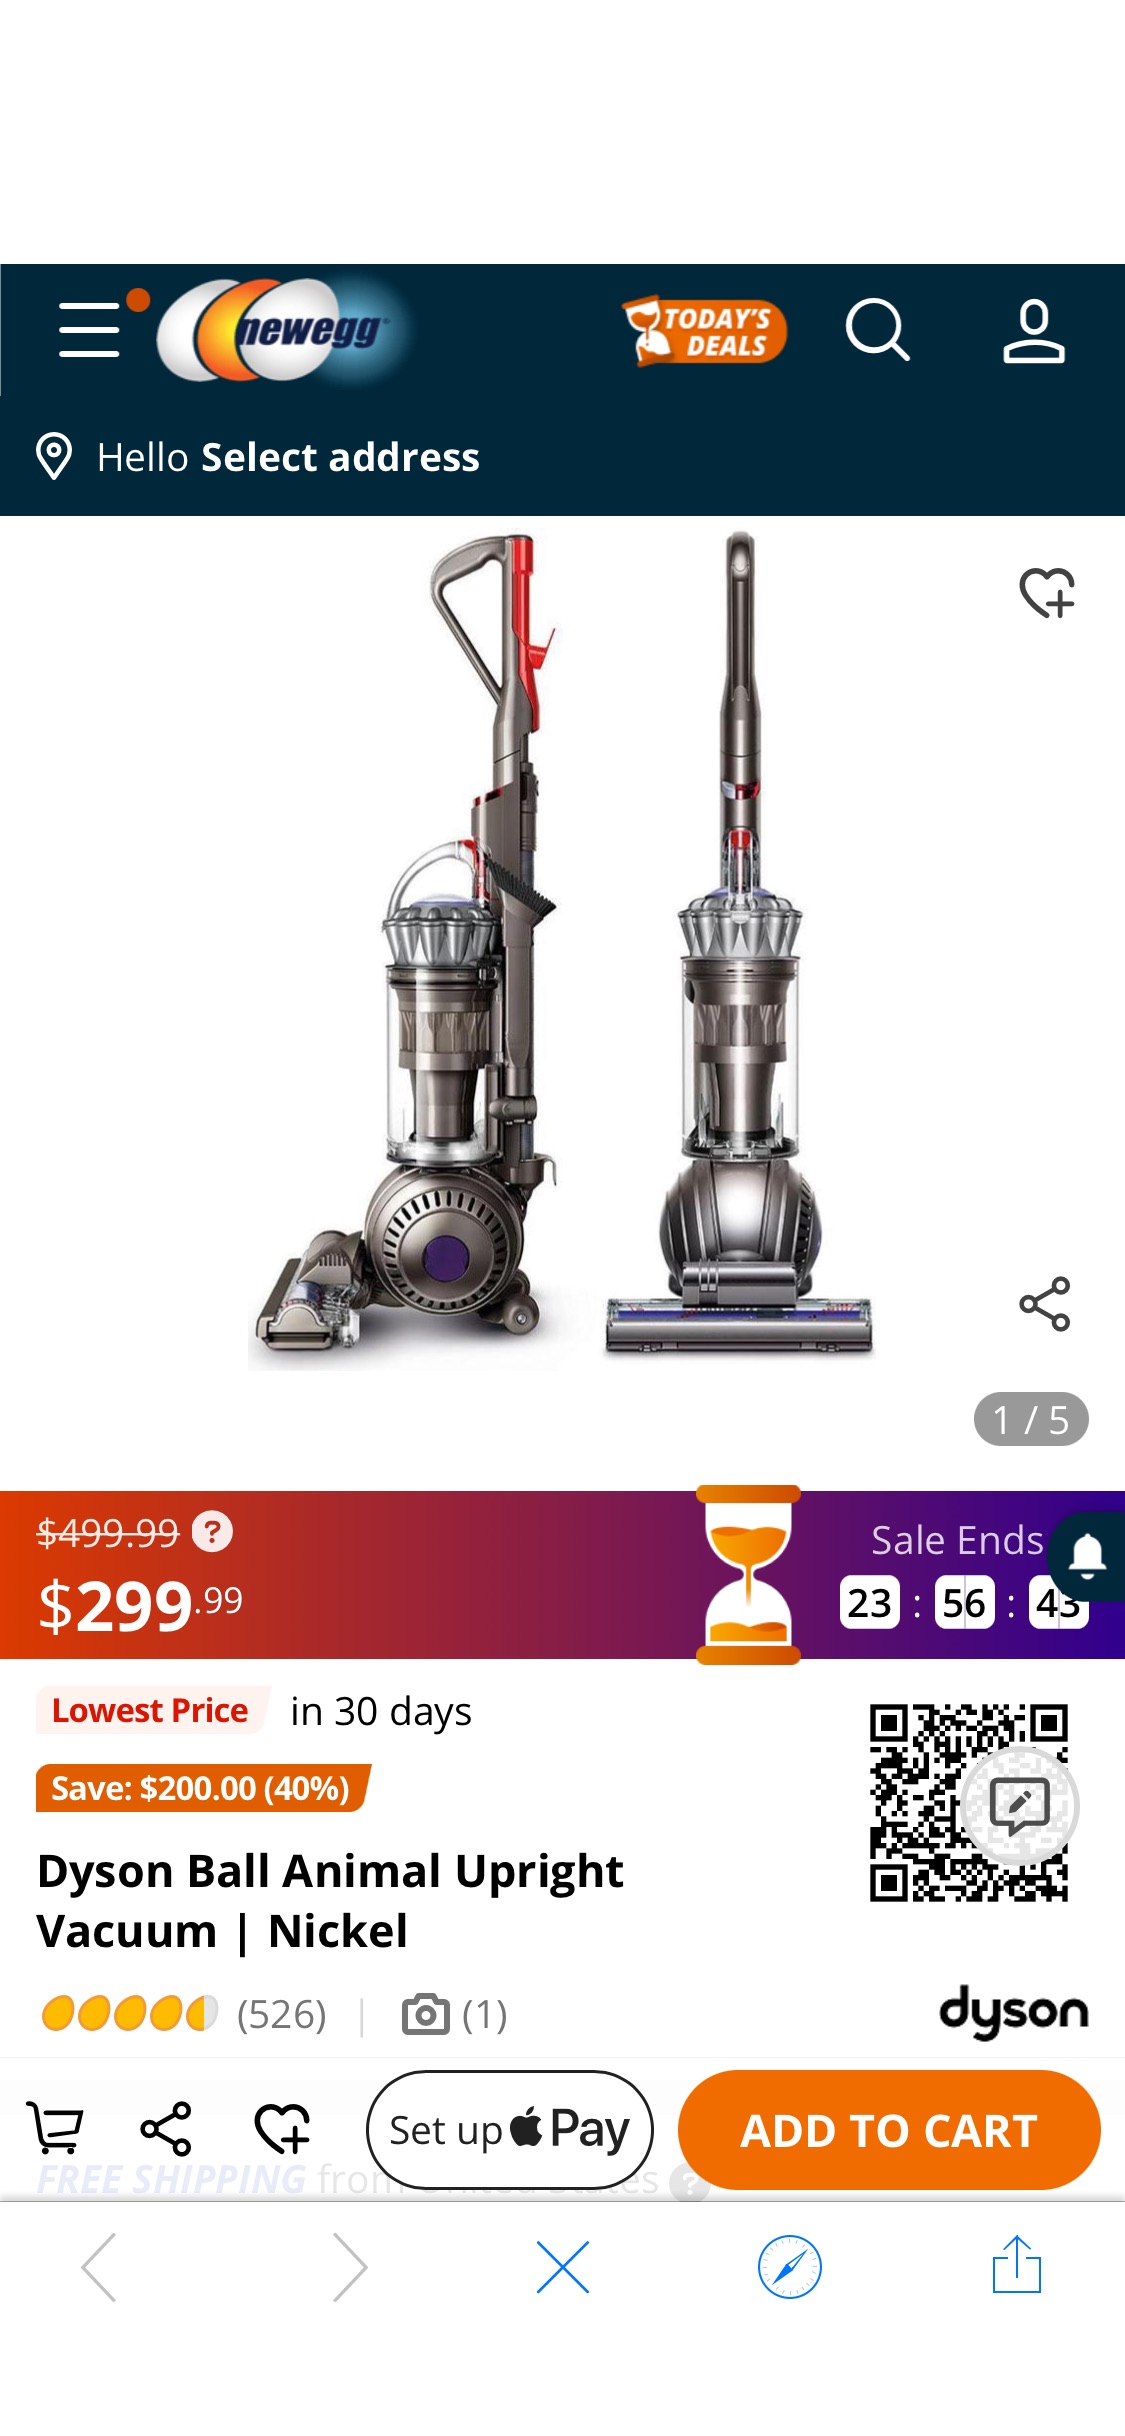 Dyson Ball Animal Upright Vacuum | Nickel Upright Vacuums - Newegg.com促销